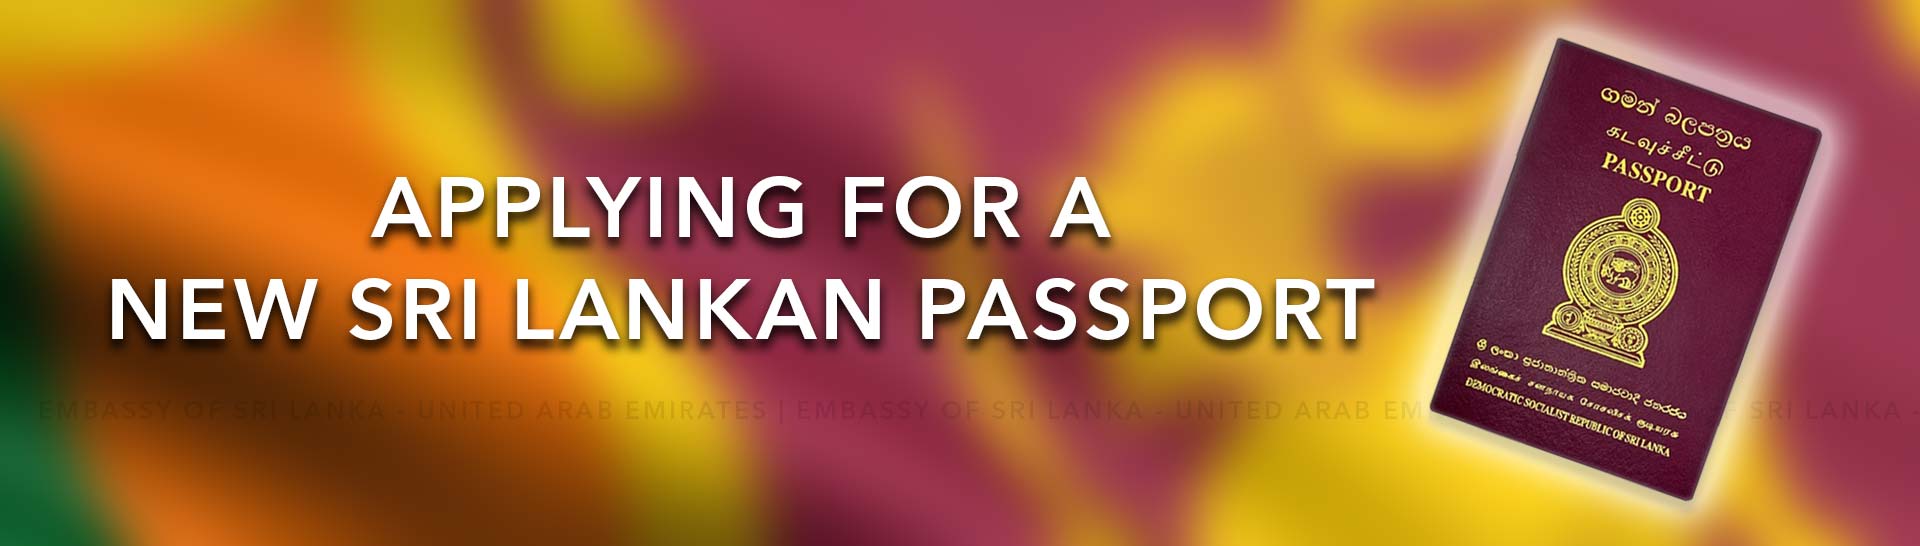 applying-for-a-new-sri-lankan-passport-embassy-of-sri-lanka-uae